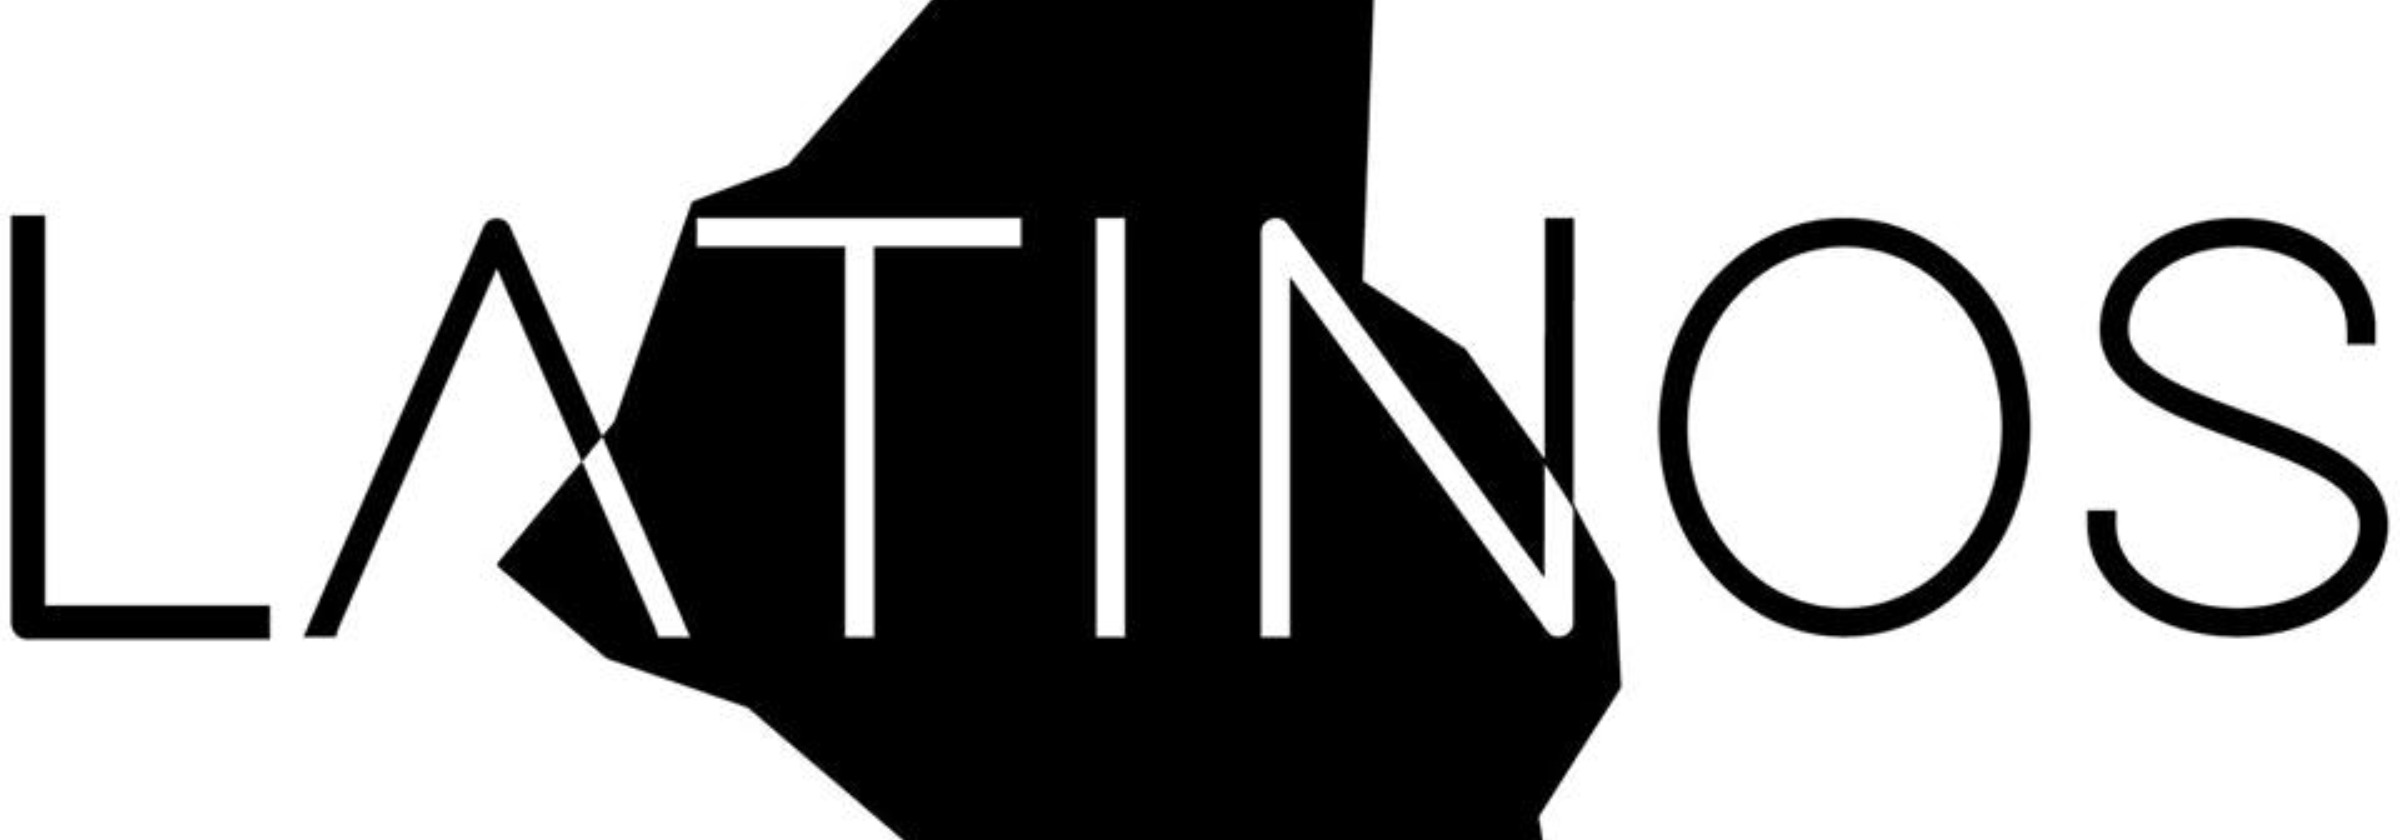 Latinx Logo